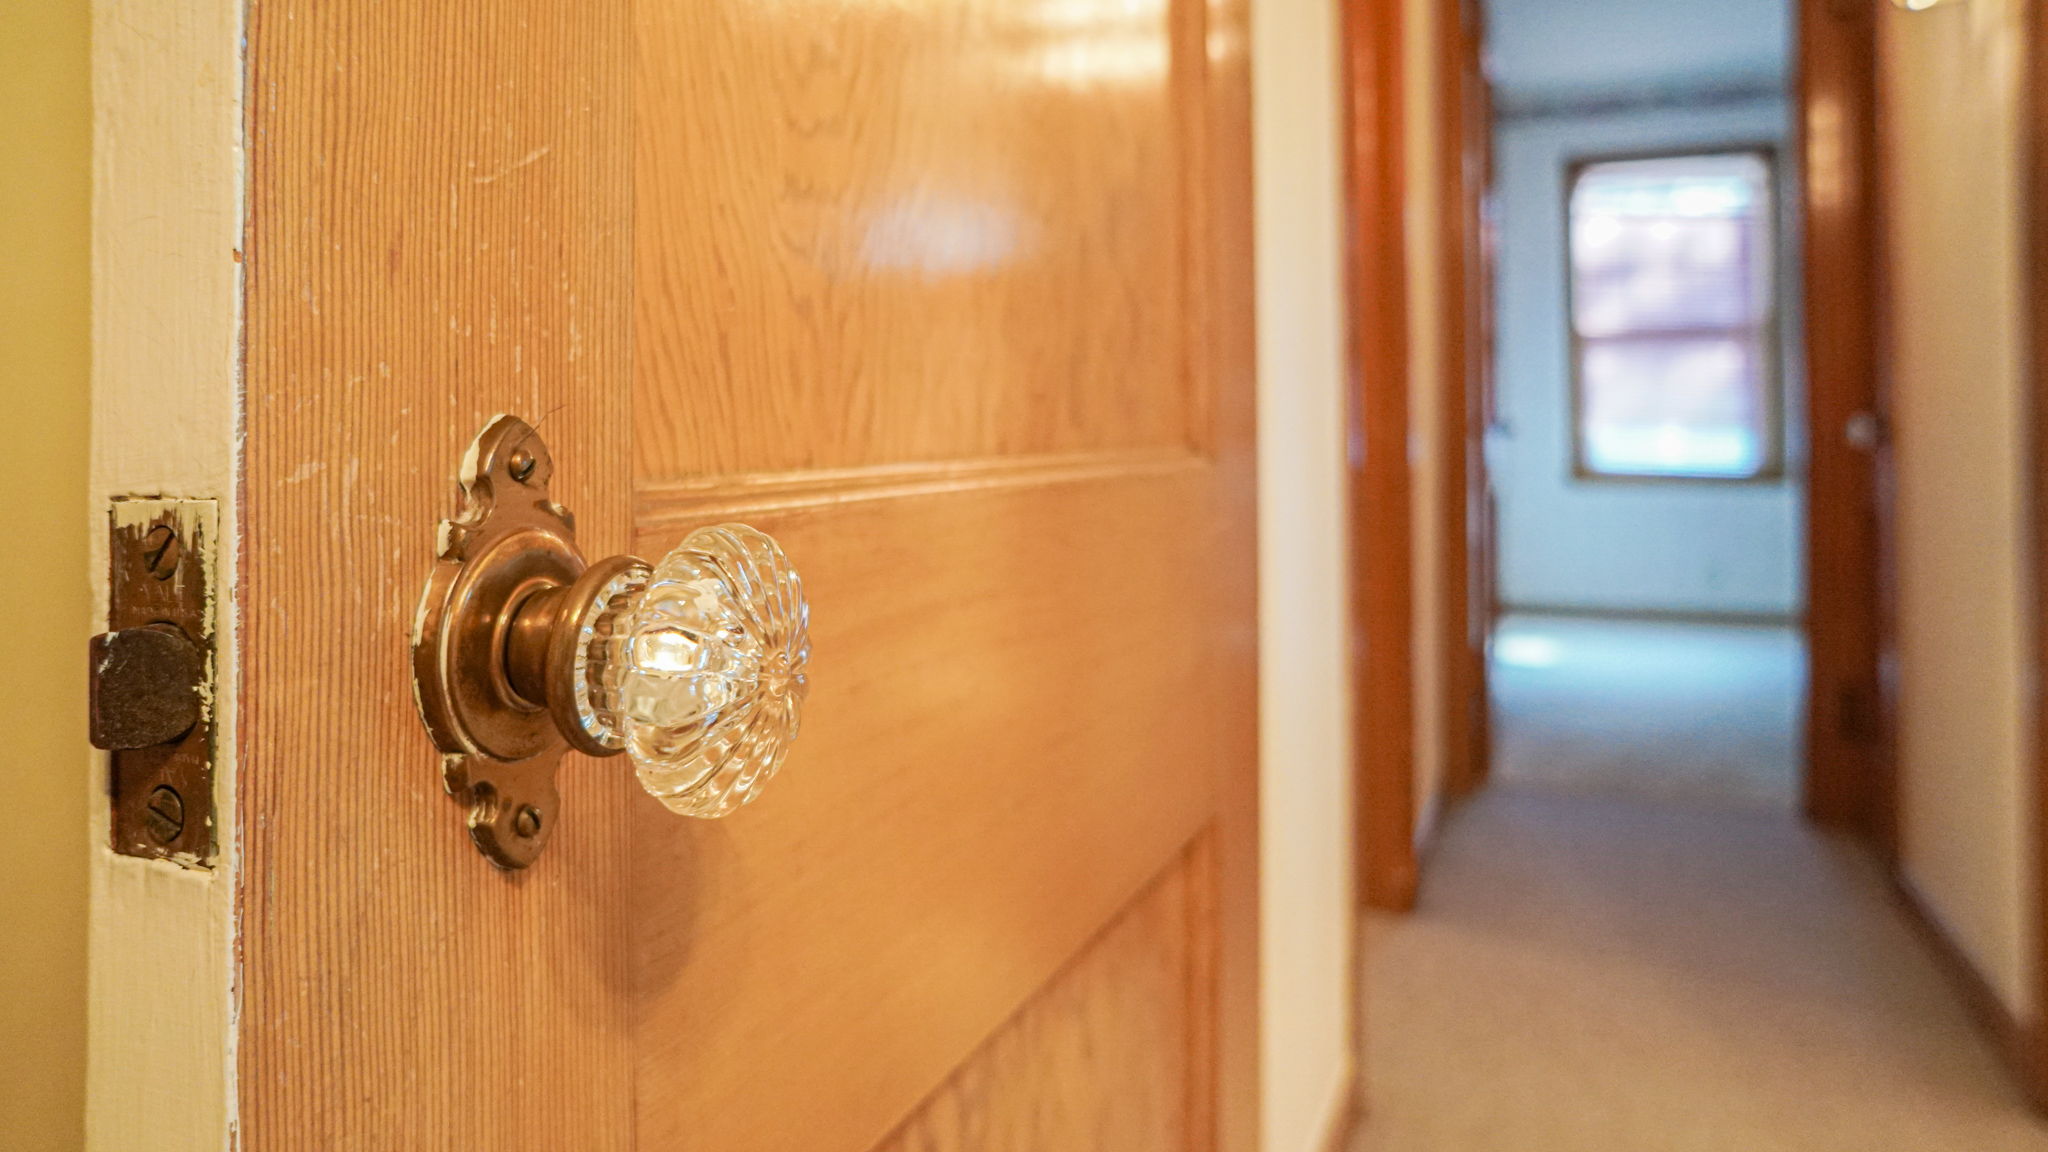 Original glass knob hardware on all doors!